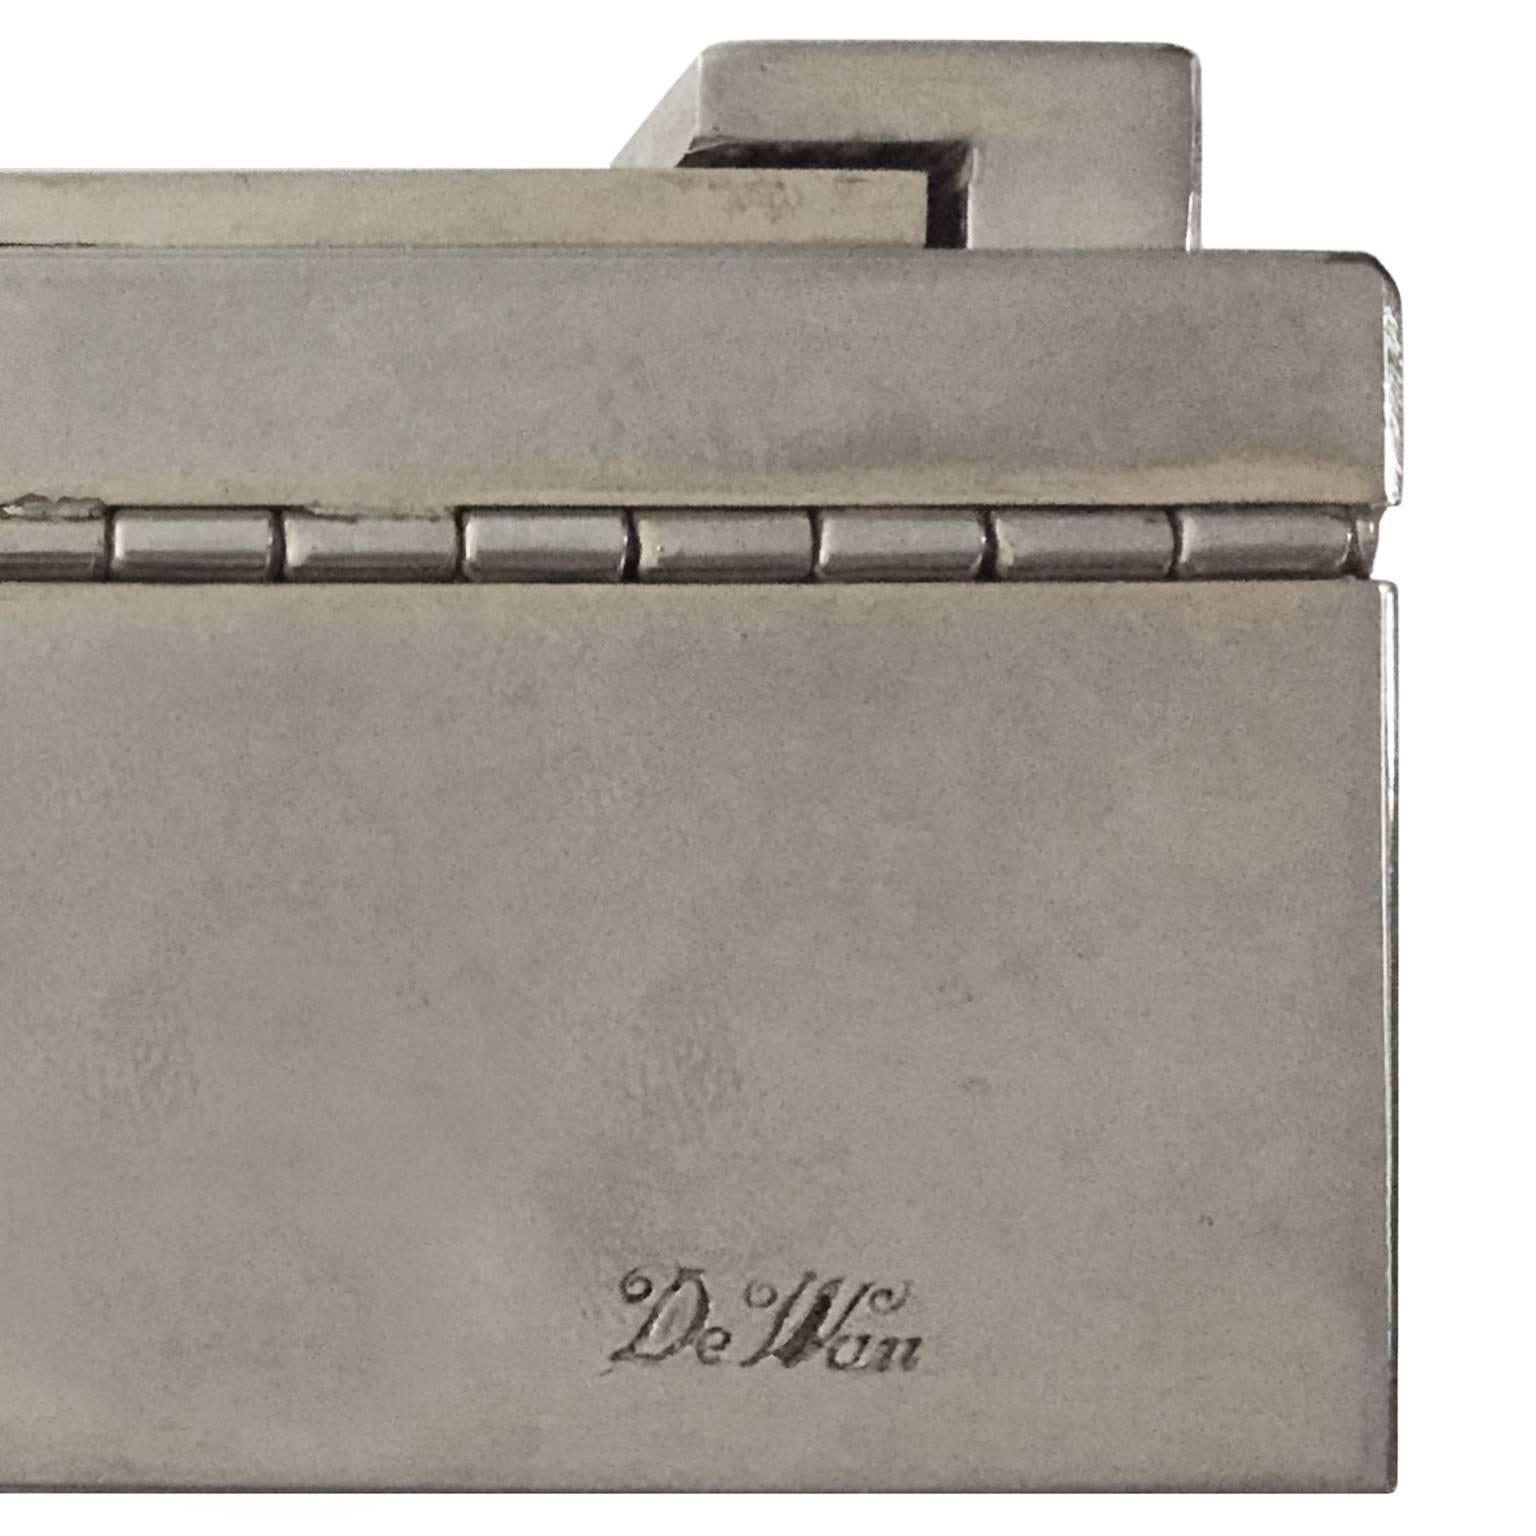 1970s Italian Rectangular Silver Box with Braided Detail by De Wan 1